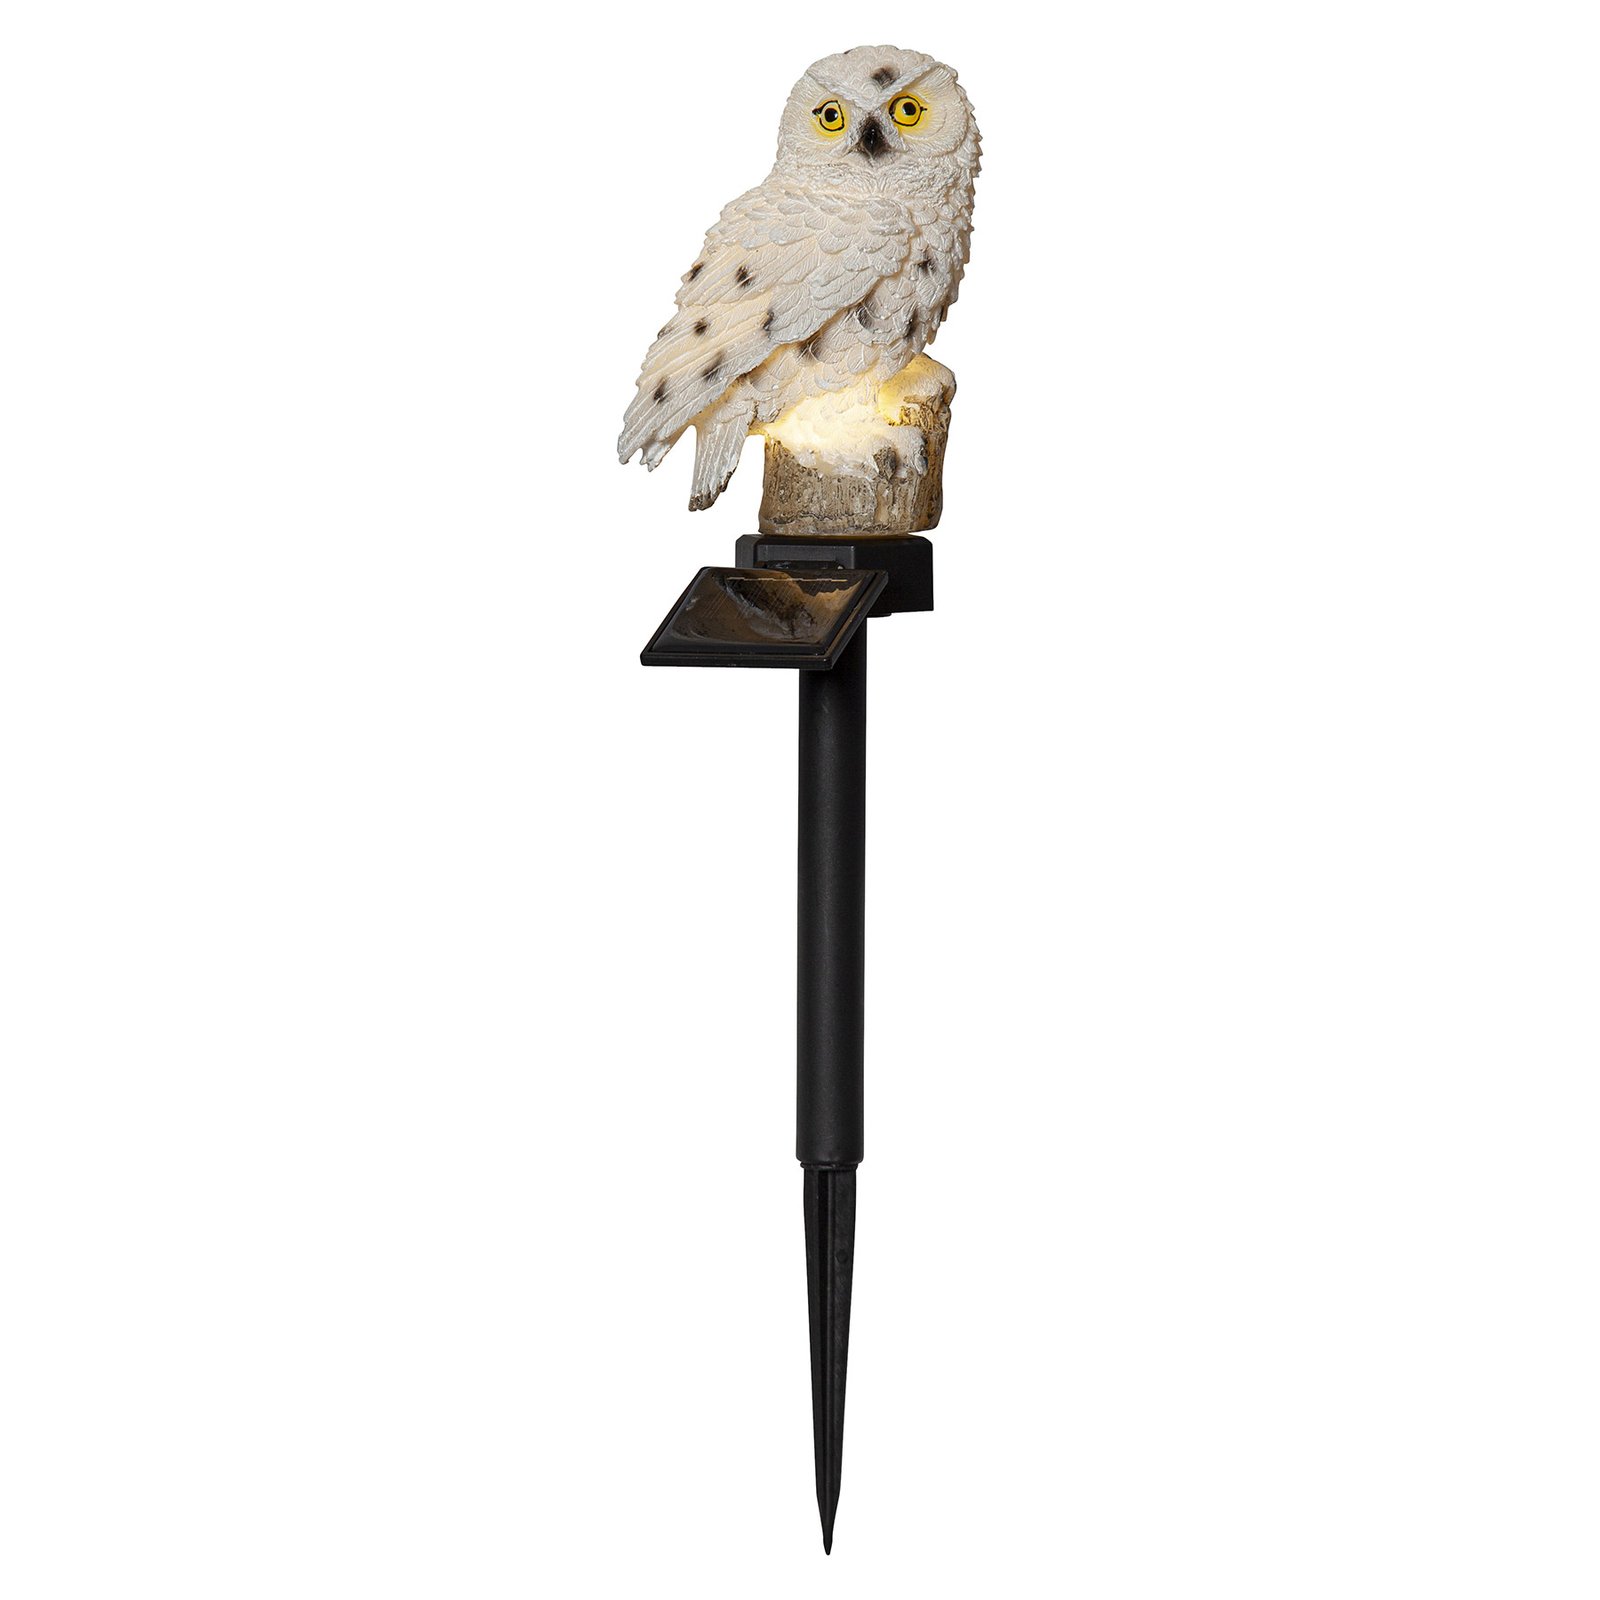 Owl LED solar light with a ground spike